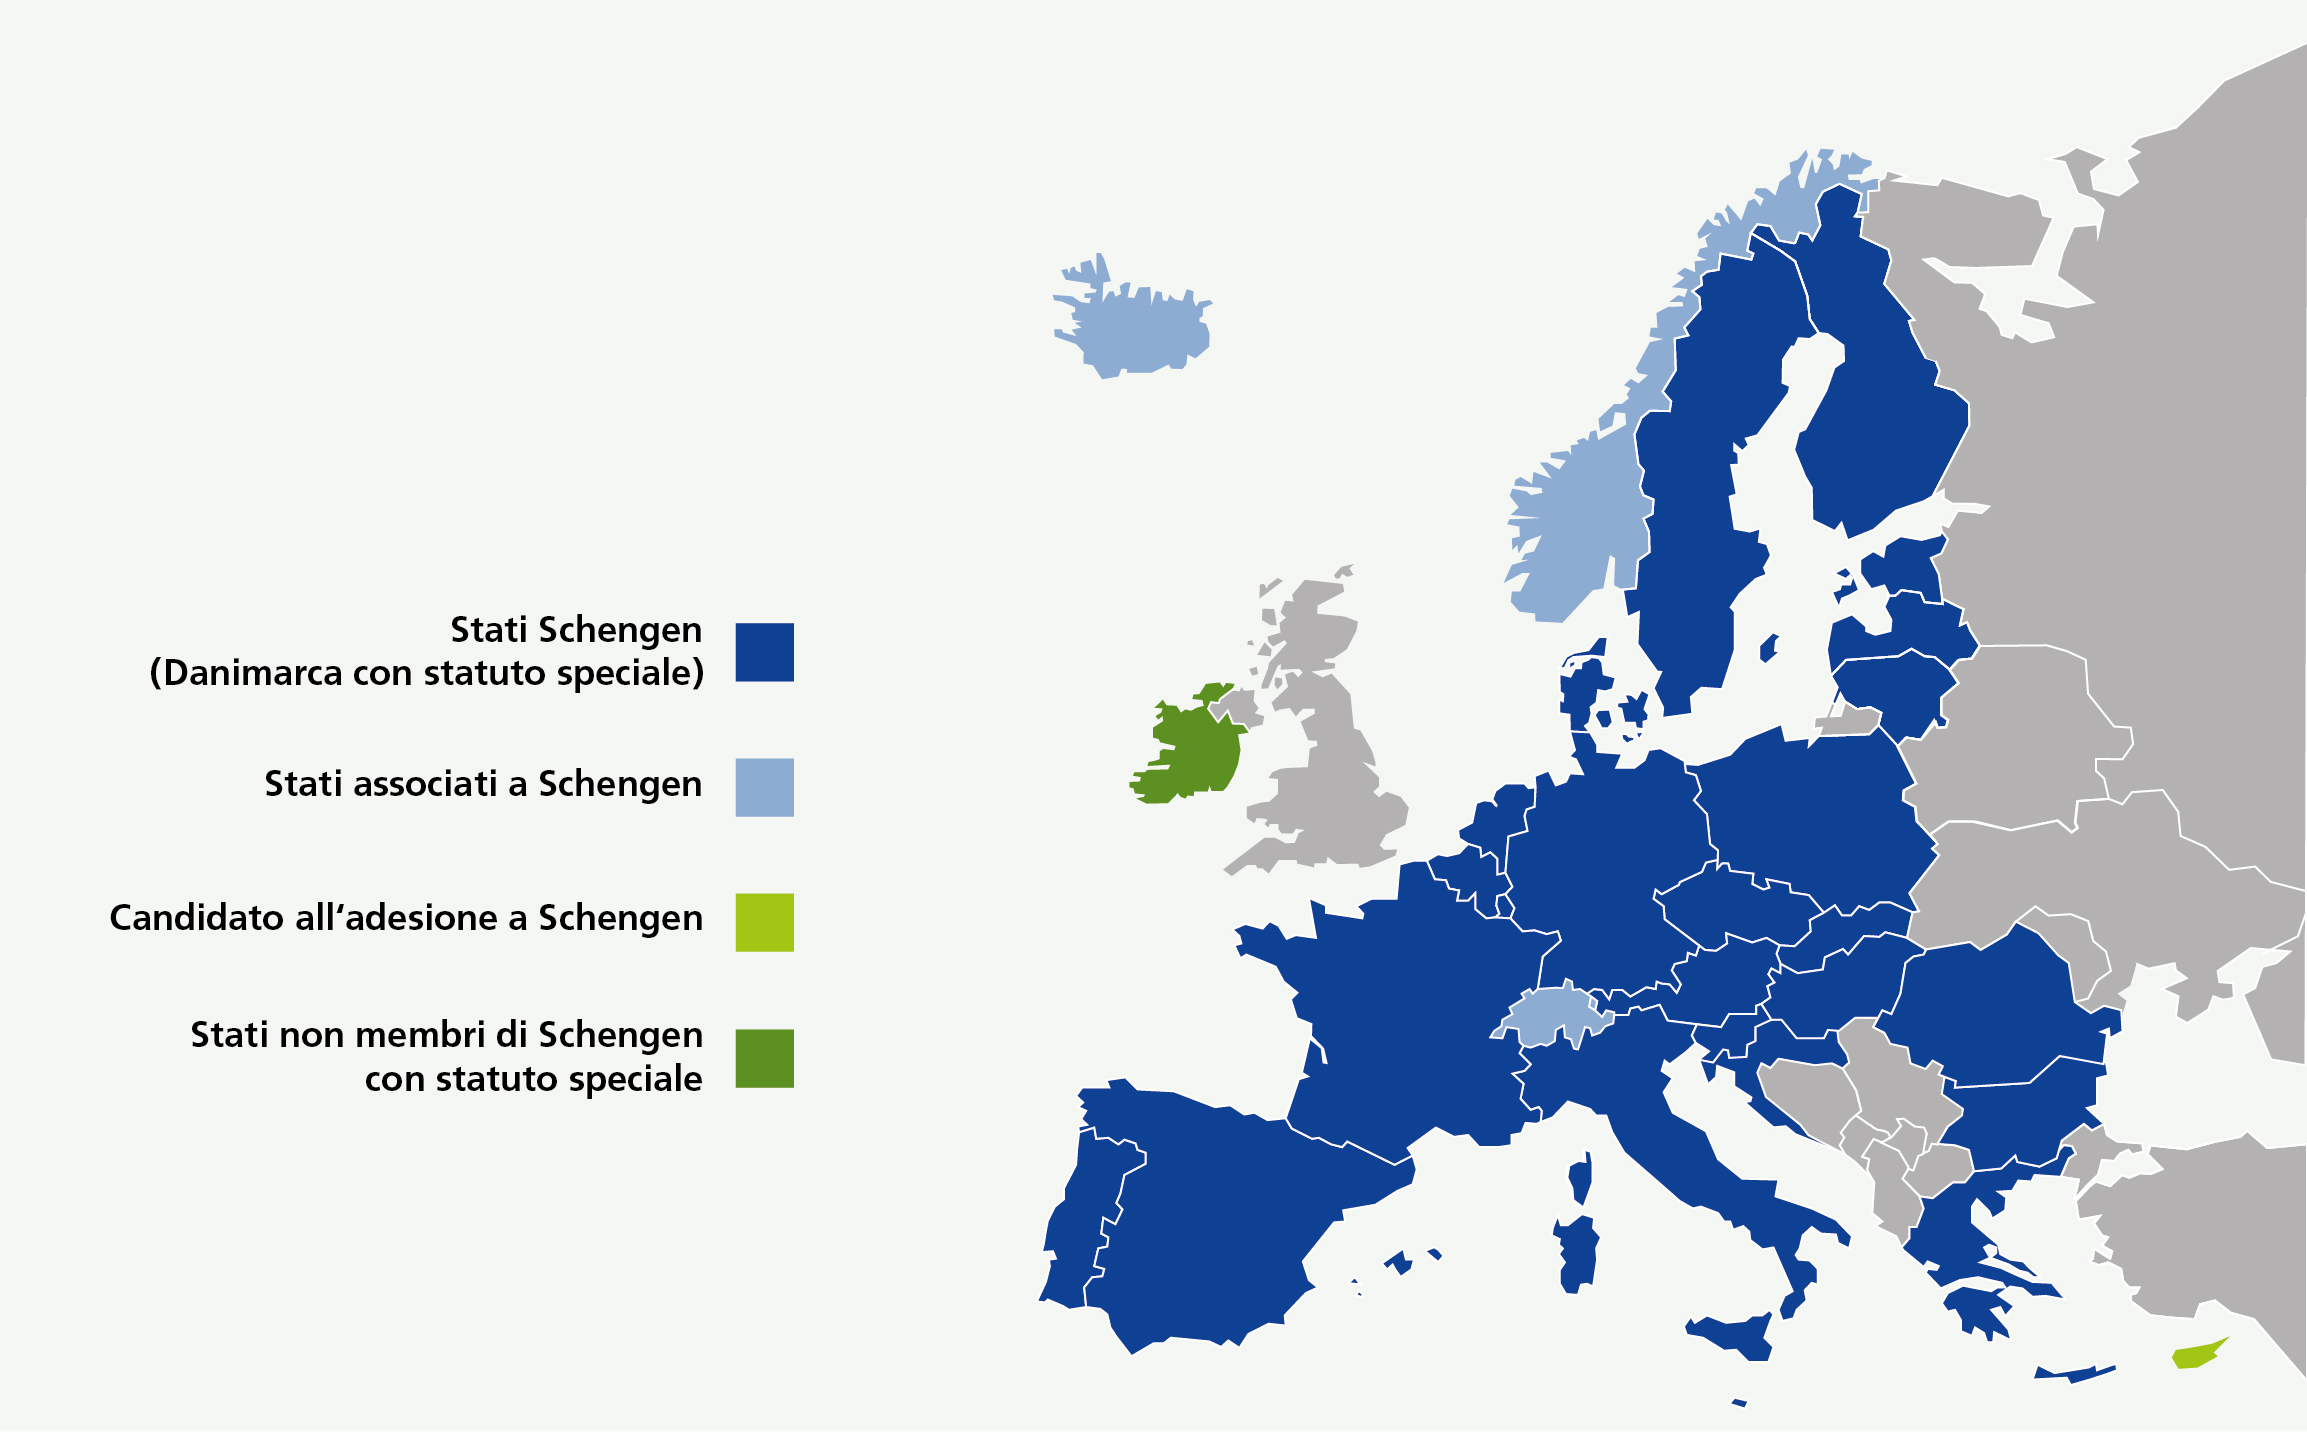 Cartina dello spazio Schengen